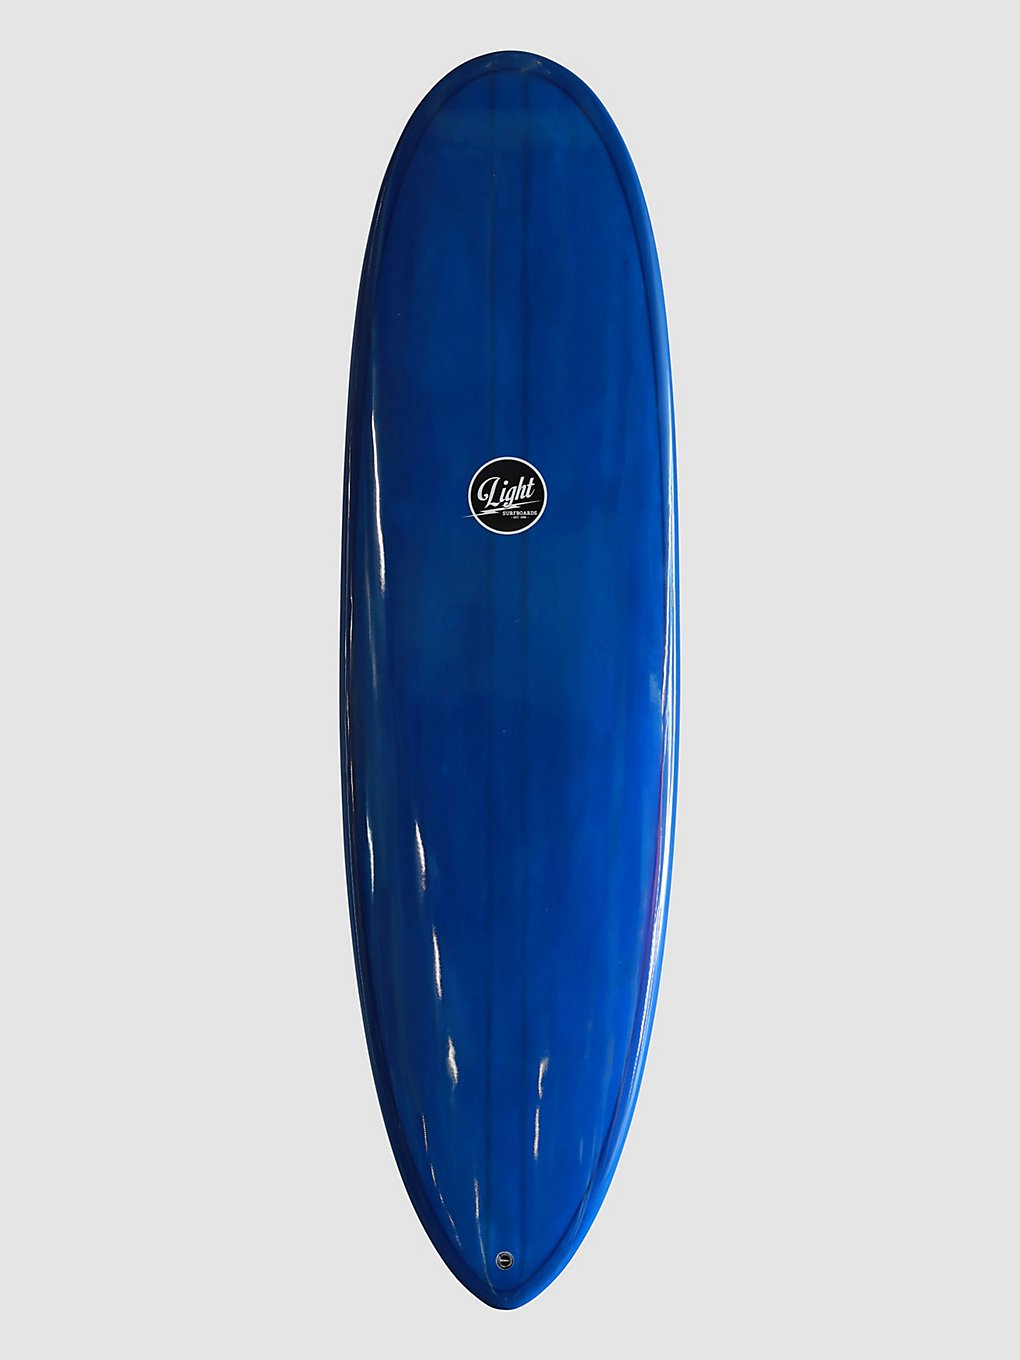 Light Golden Ratio Blue PU US + Future 8' Surfboard patroon